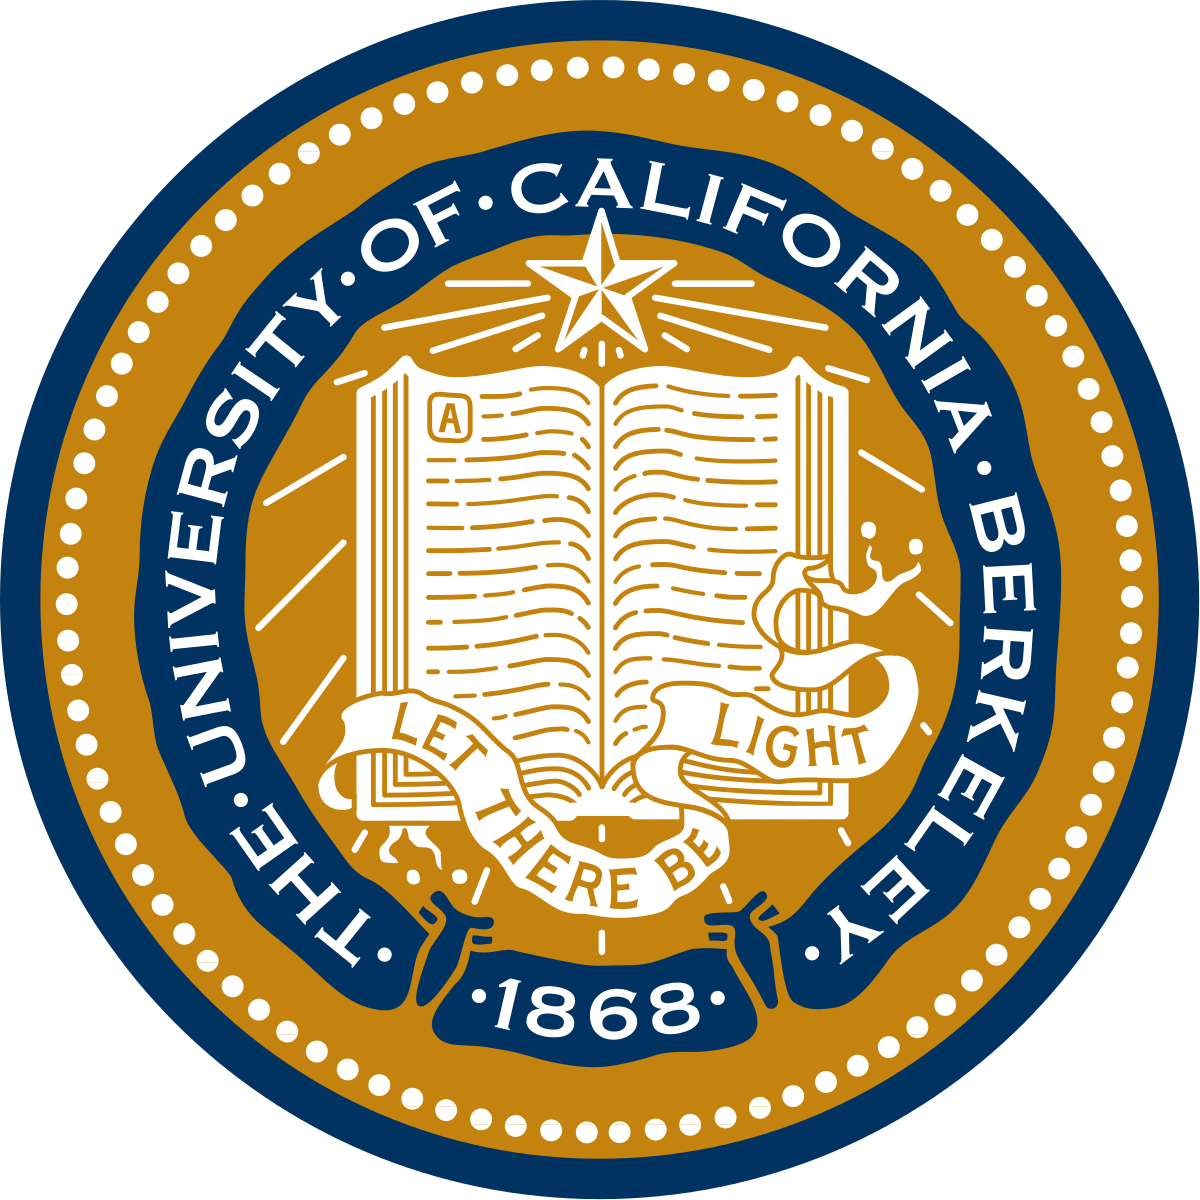 Zum Artikel "Partnerschaft mit der University of California, Berkeley"